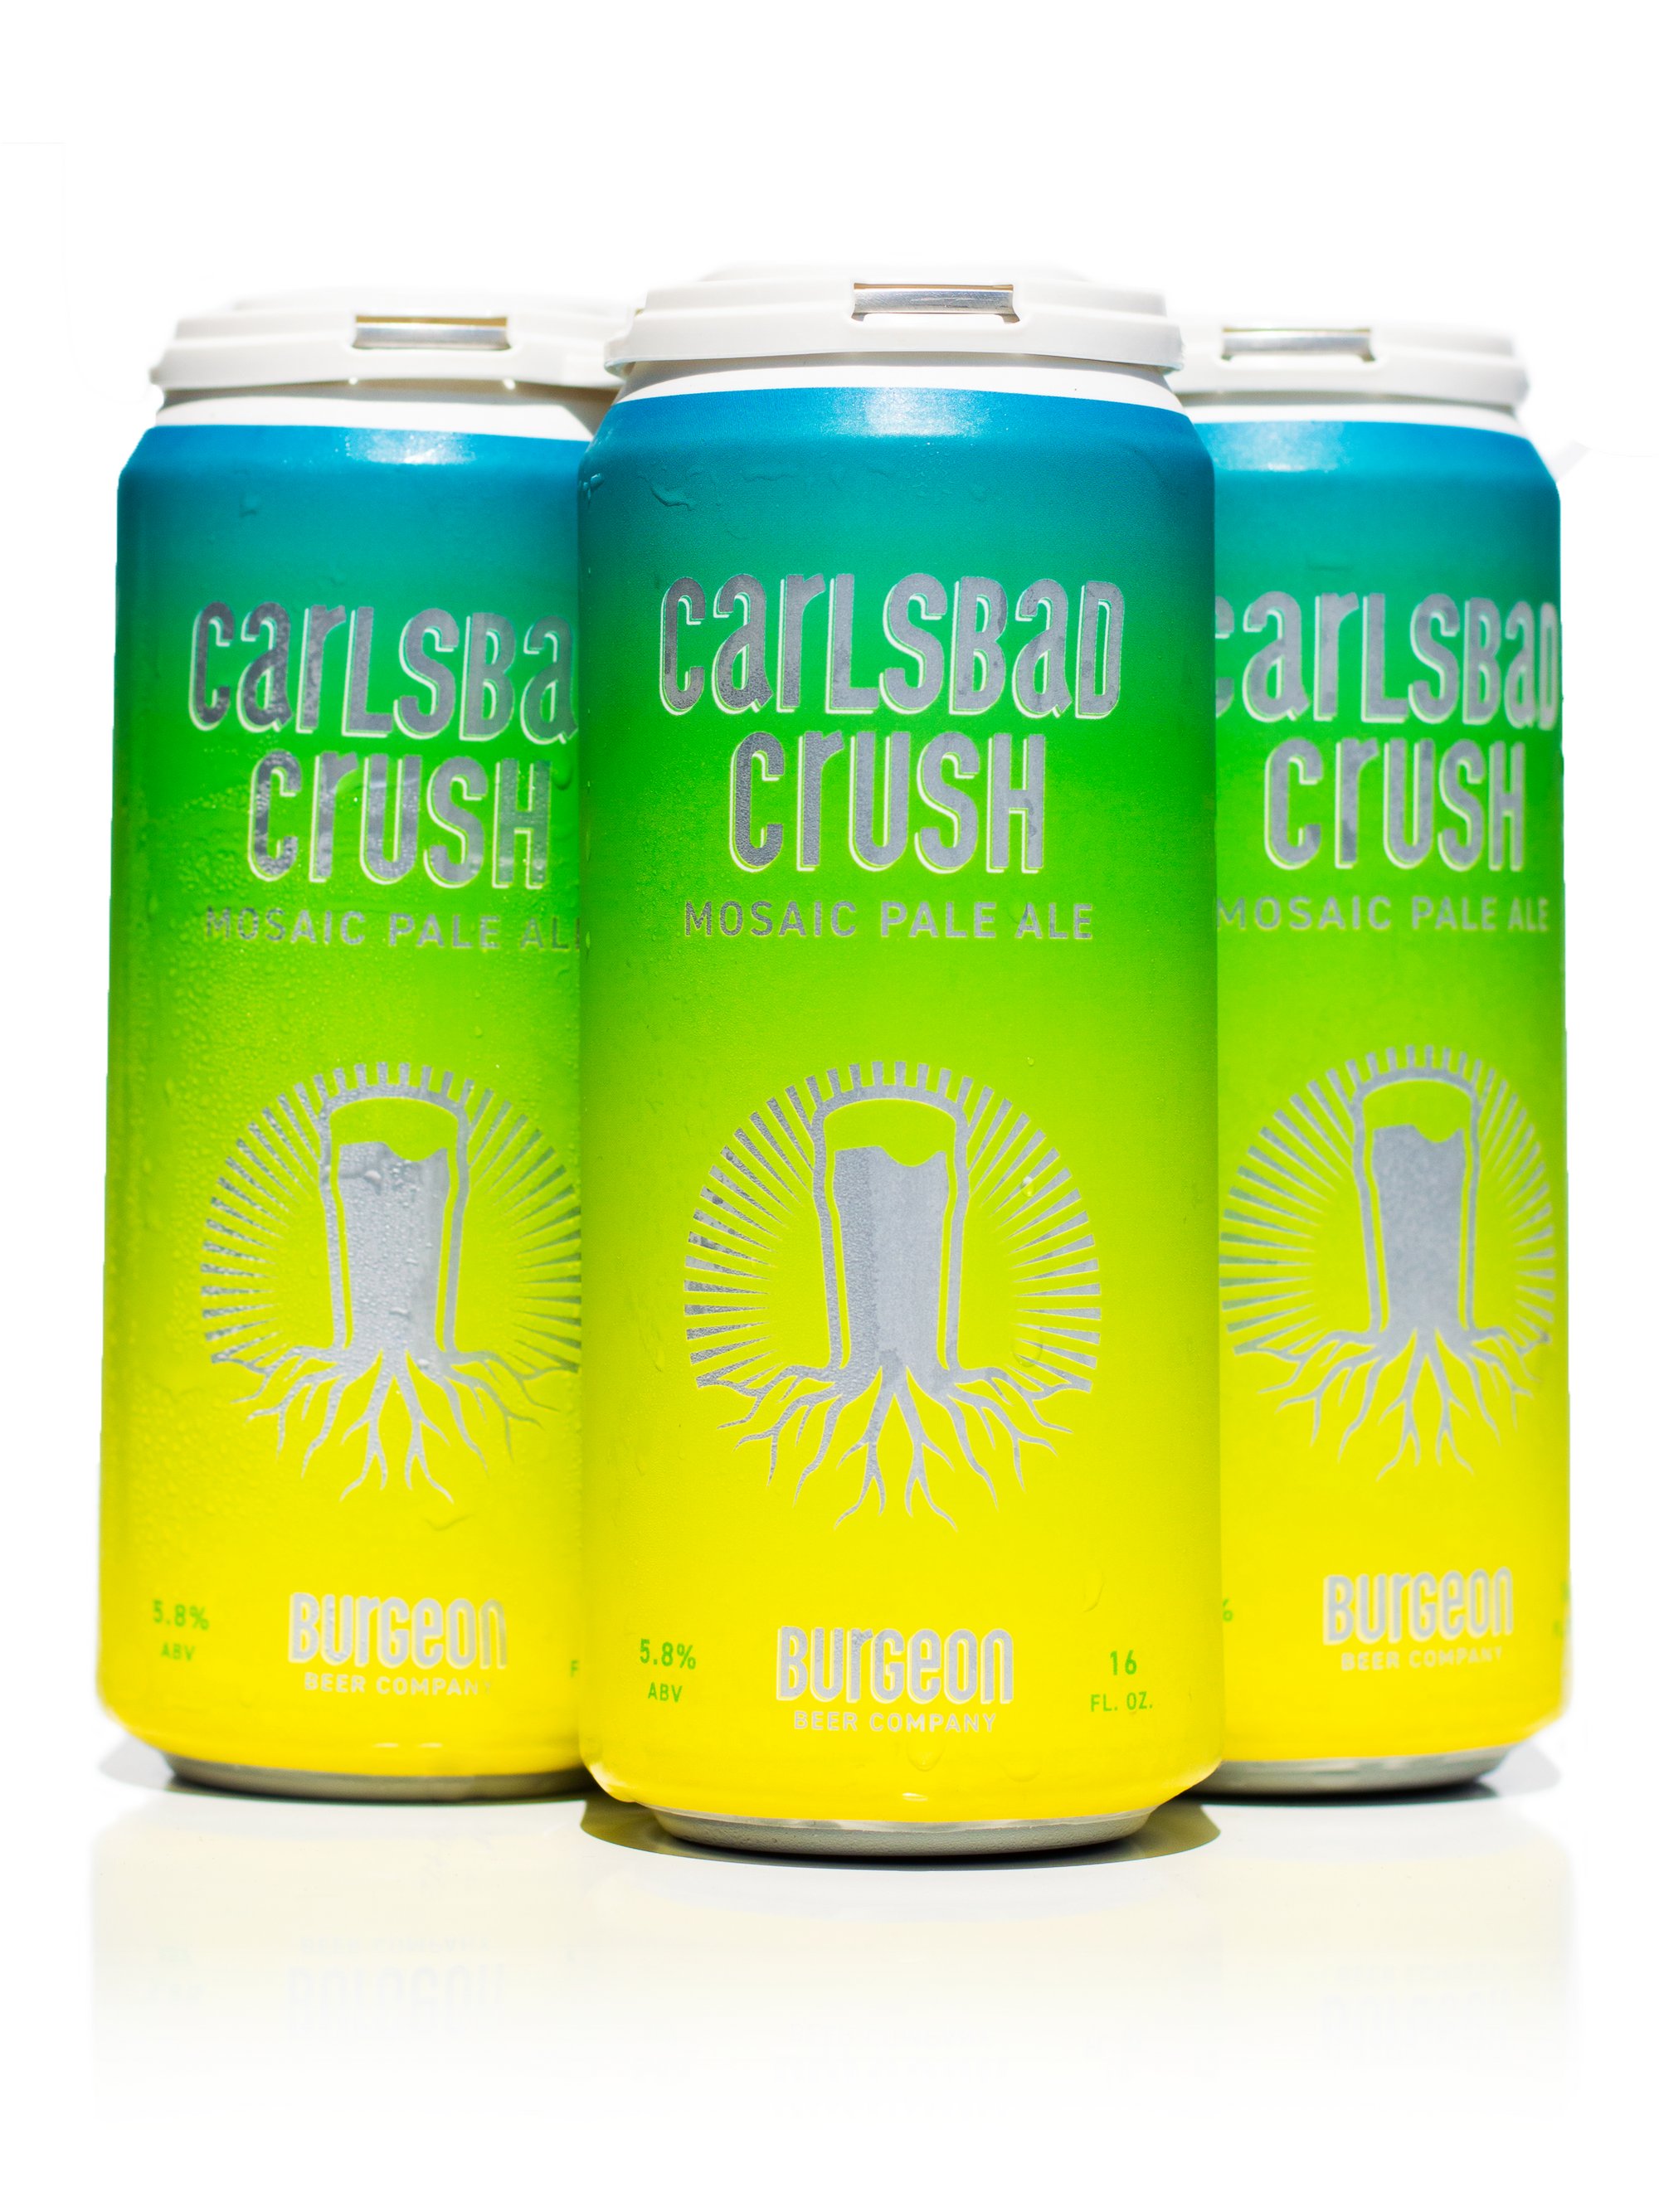 Carlsbad Crush Mosaic Pale Ale - 4 Pack